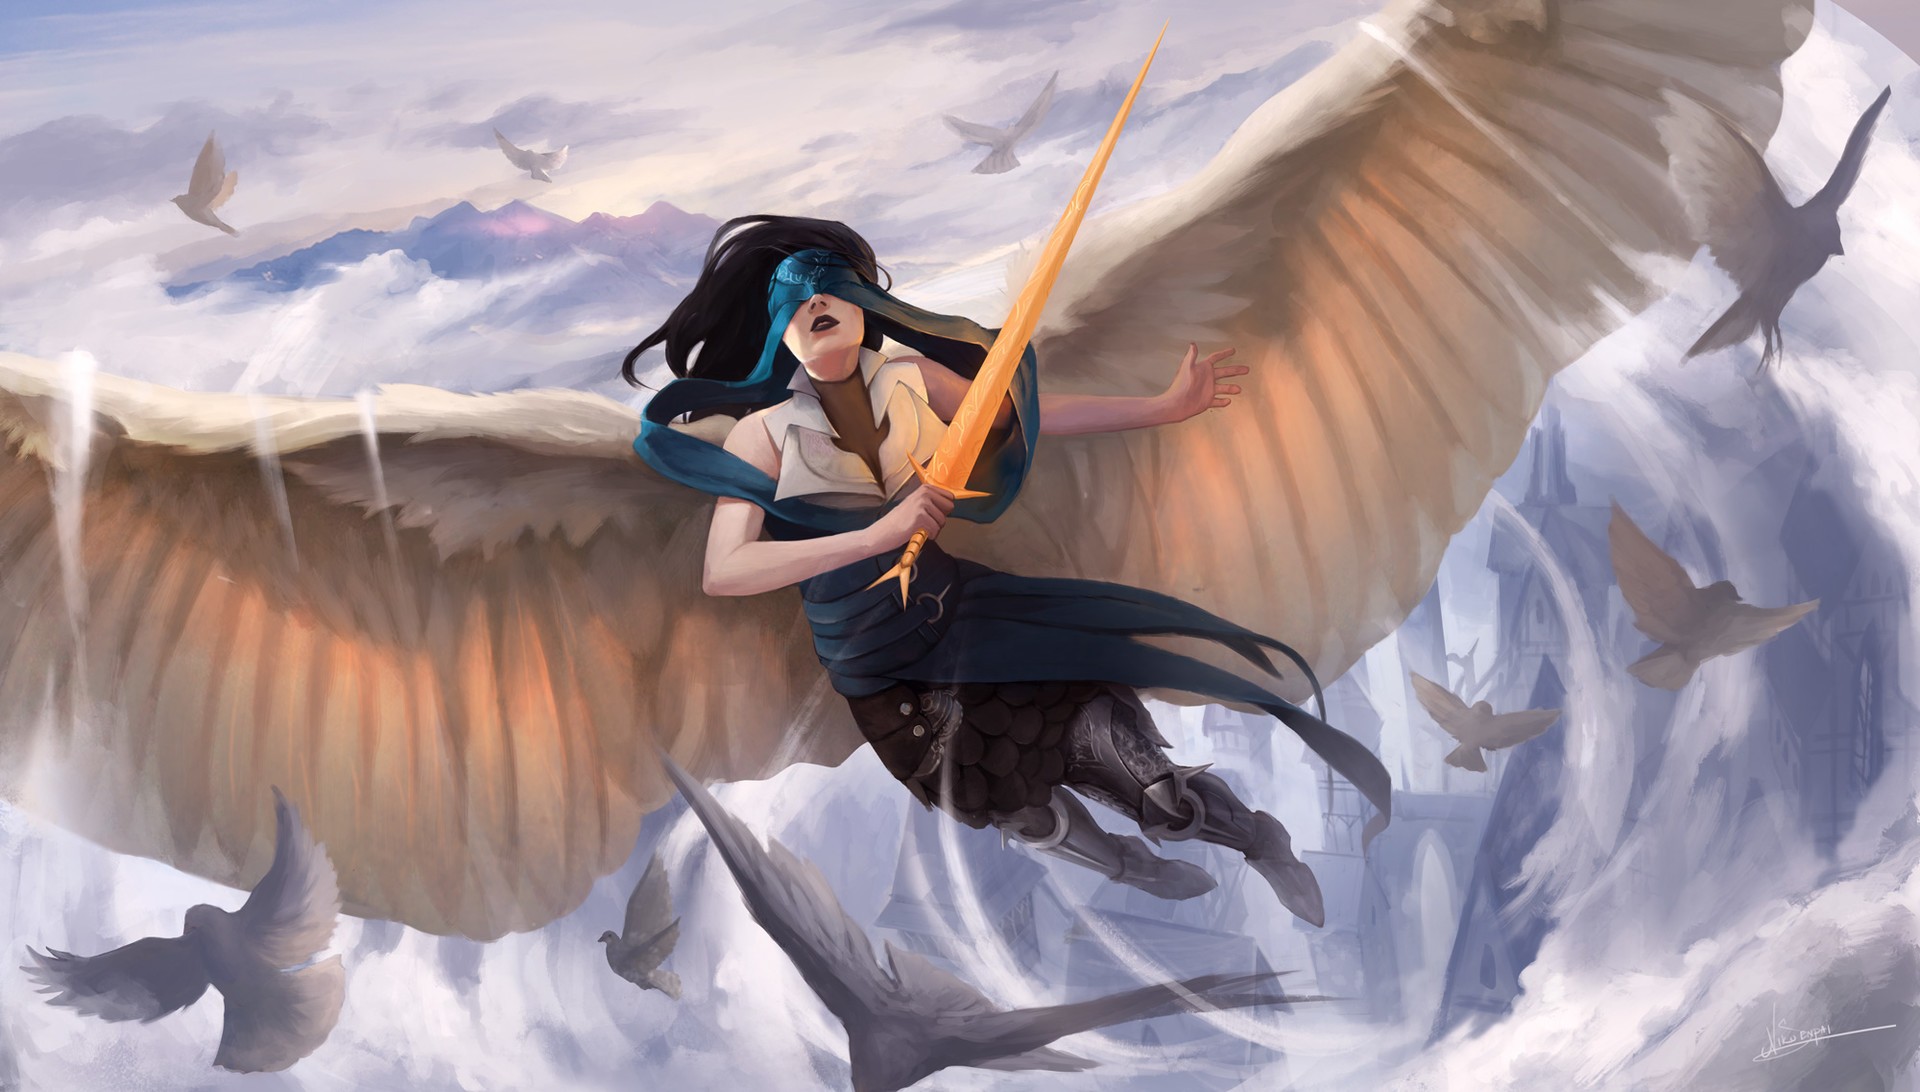 General 1920x1092 fantasy art sword dark hair wings fantasy girl blindfold sky birds animals women with swords weapon